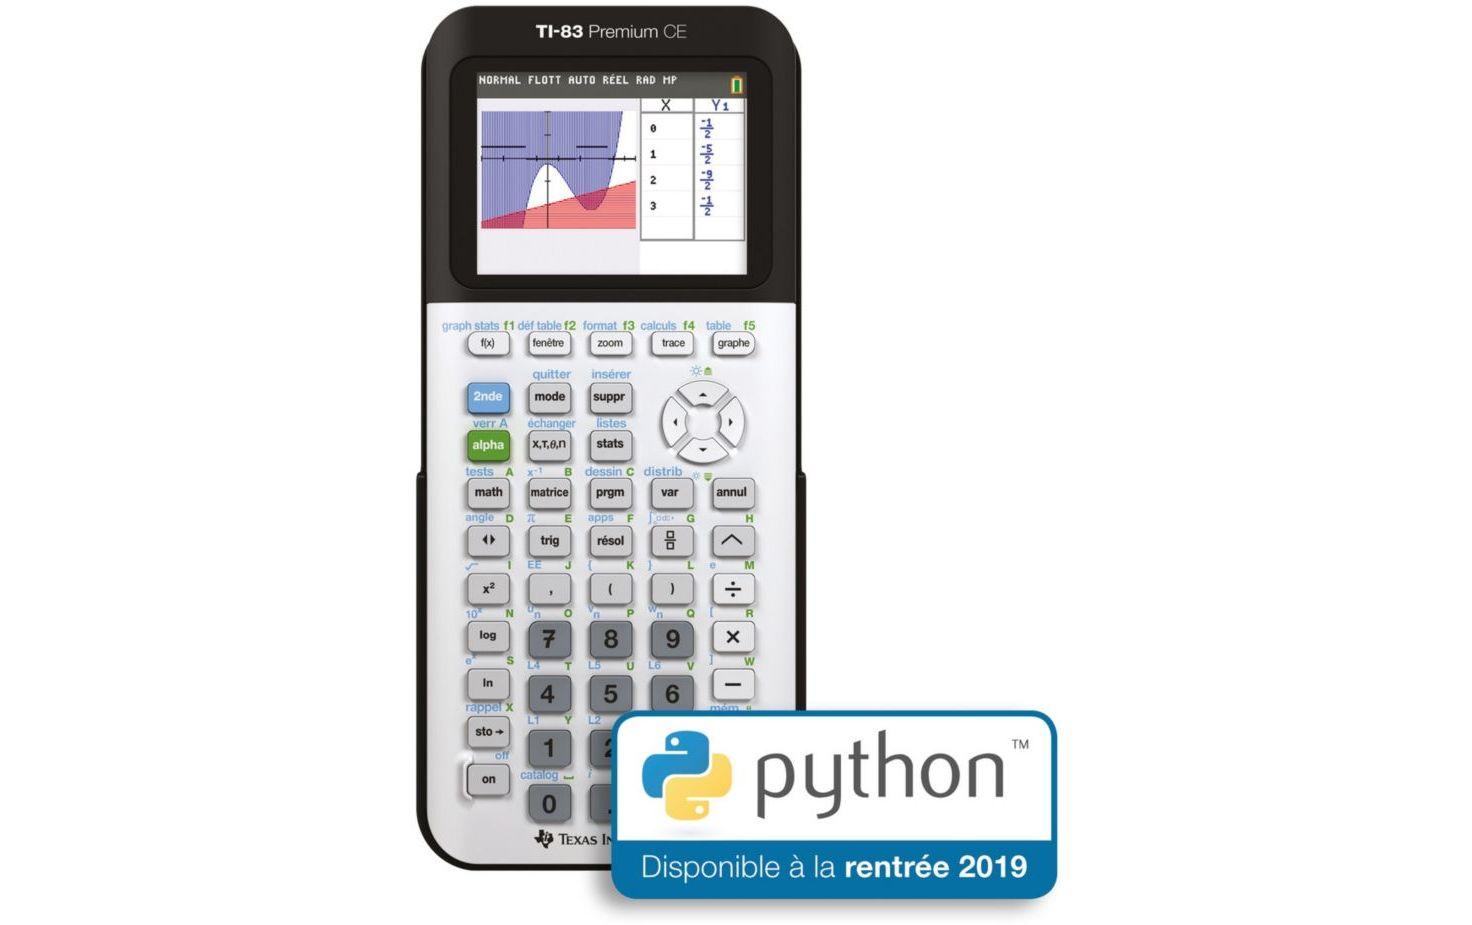 Promo Calculatrice Ti-83 Premium Ce Python chez Bureau Vallée